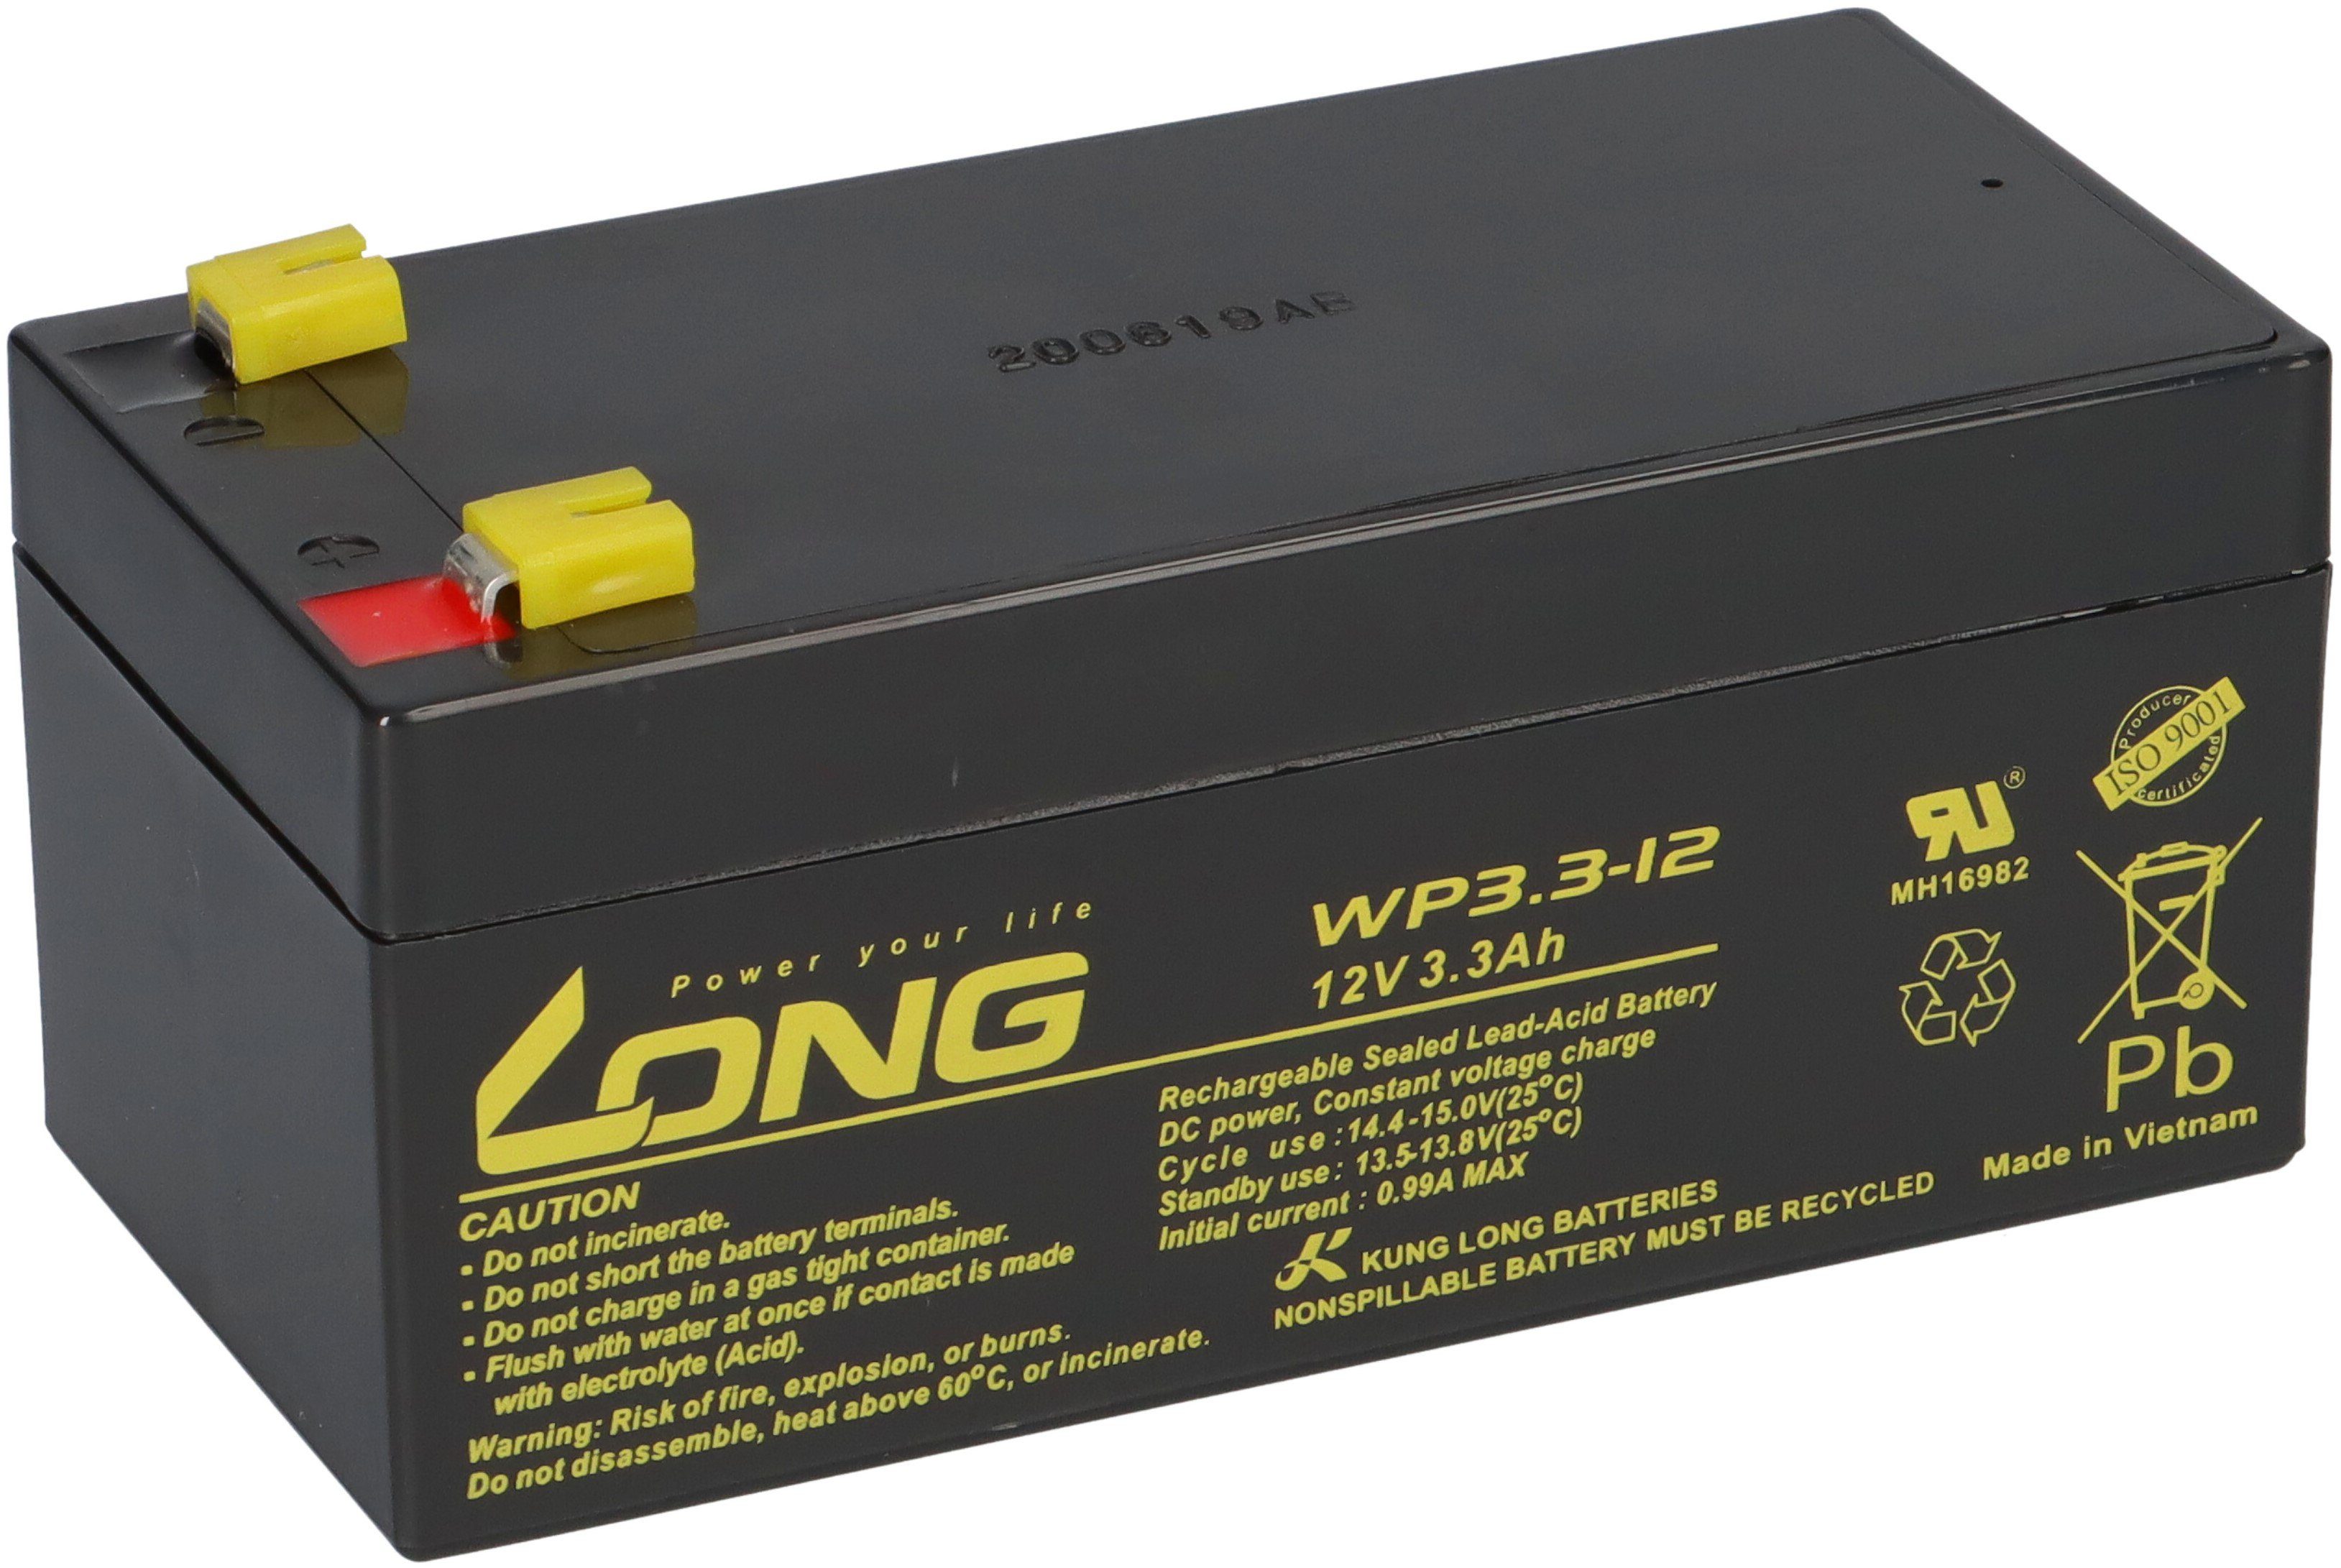 Kung Long Bleiakku 3,3Ah Bleiakkus AGM VdS kompatibel 12V battery MS3.3-12